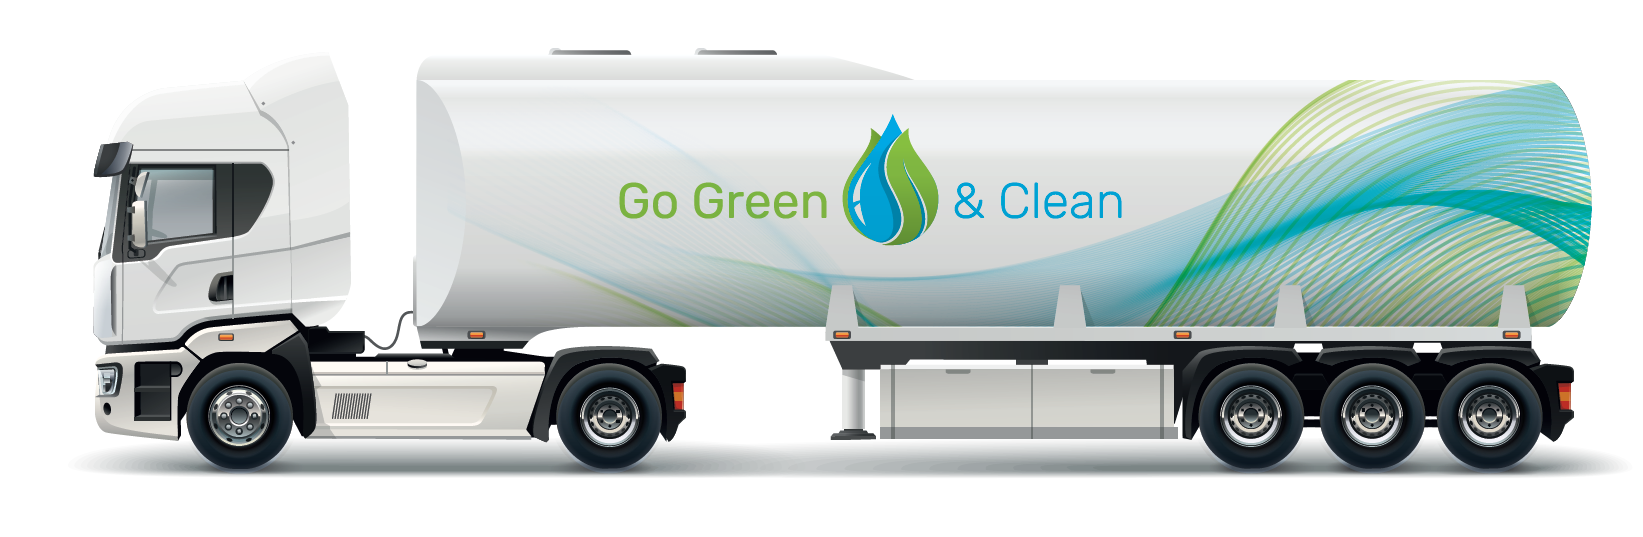 Go Green & Clean truck